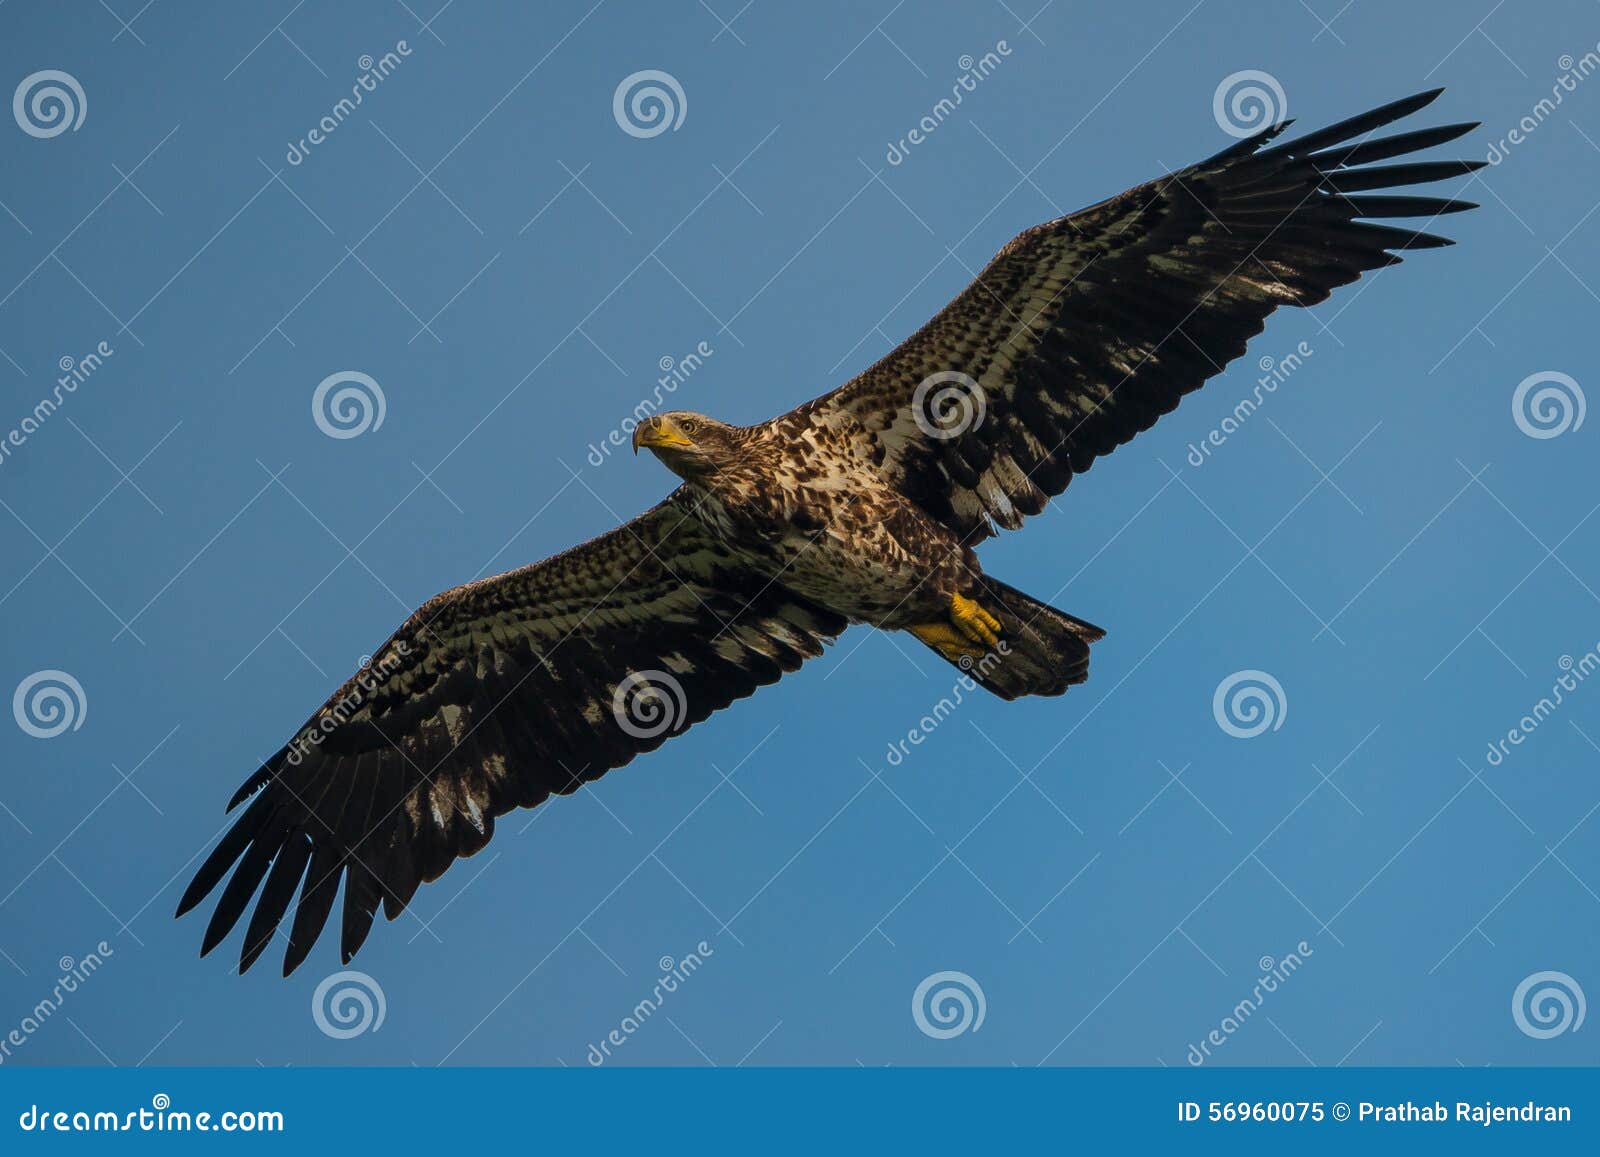 Juvenile Bald Eagle In Flight Stock Image Image Of Bluesky Birdy 56960075